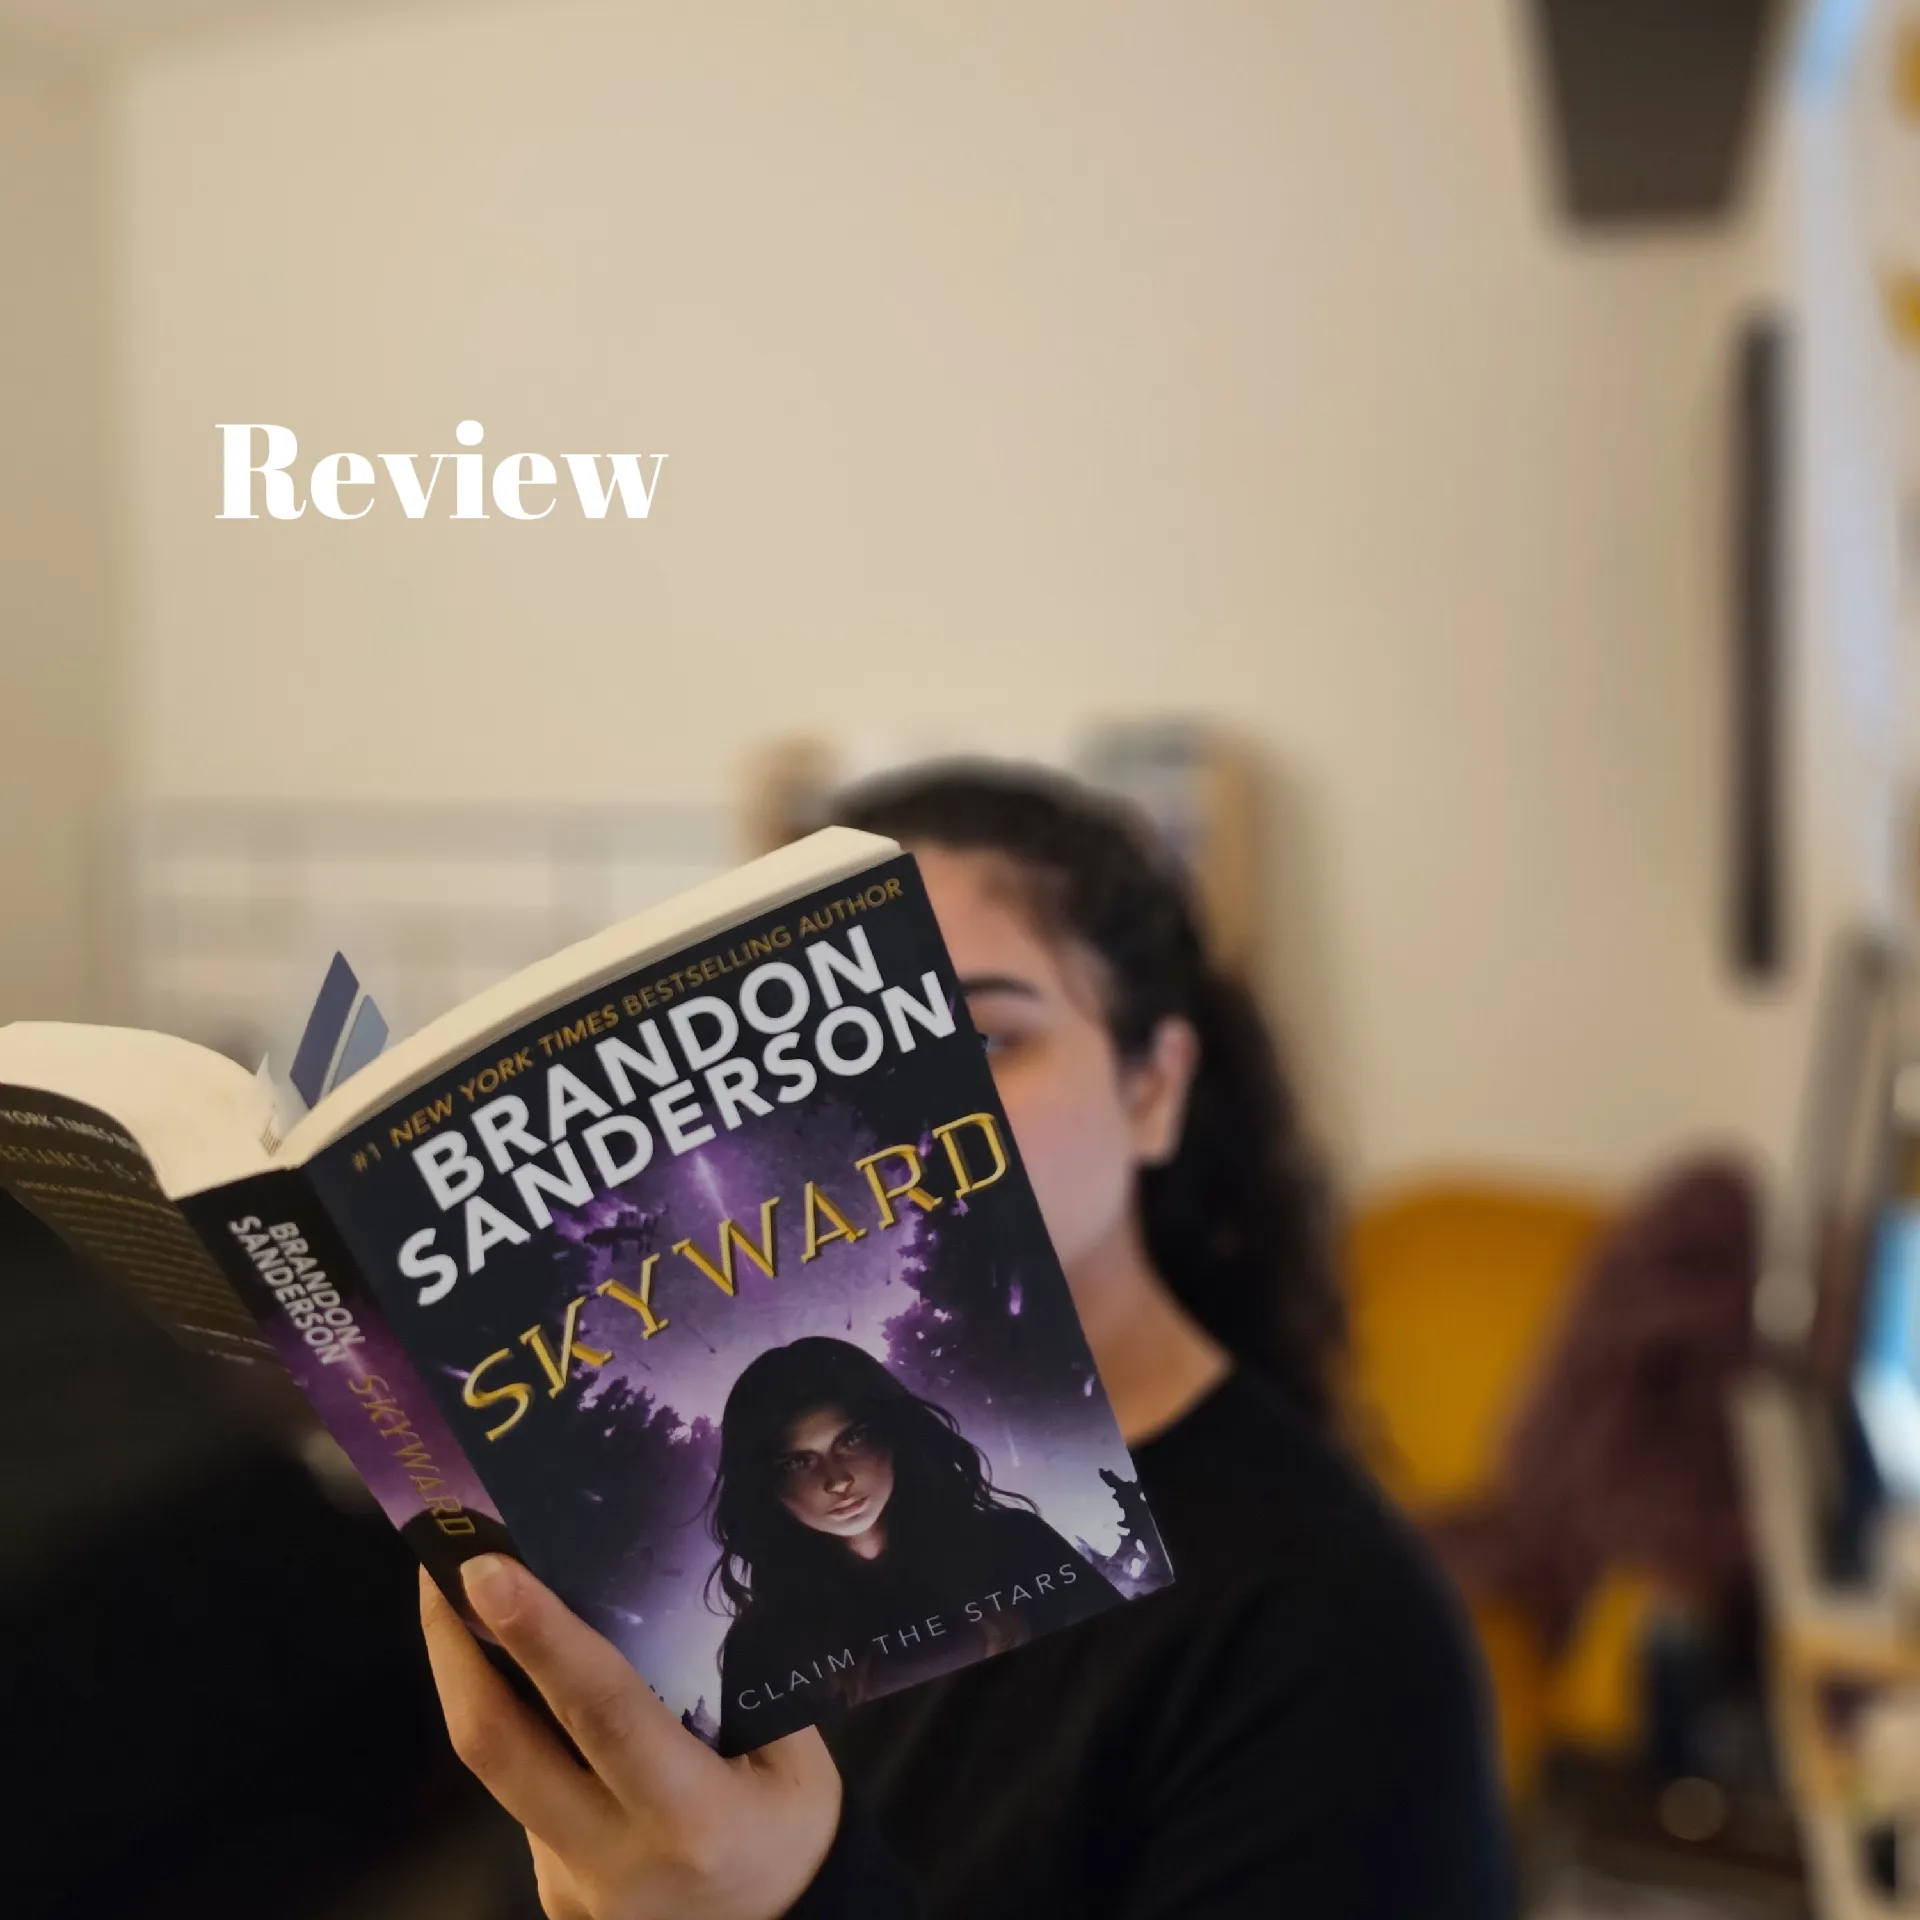 A Non-Spoiler Review of Skyward, a Young Adult Novel from Brandon